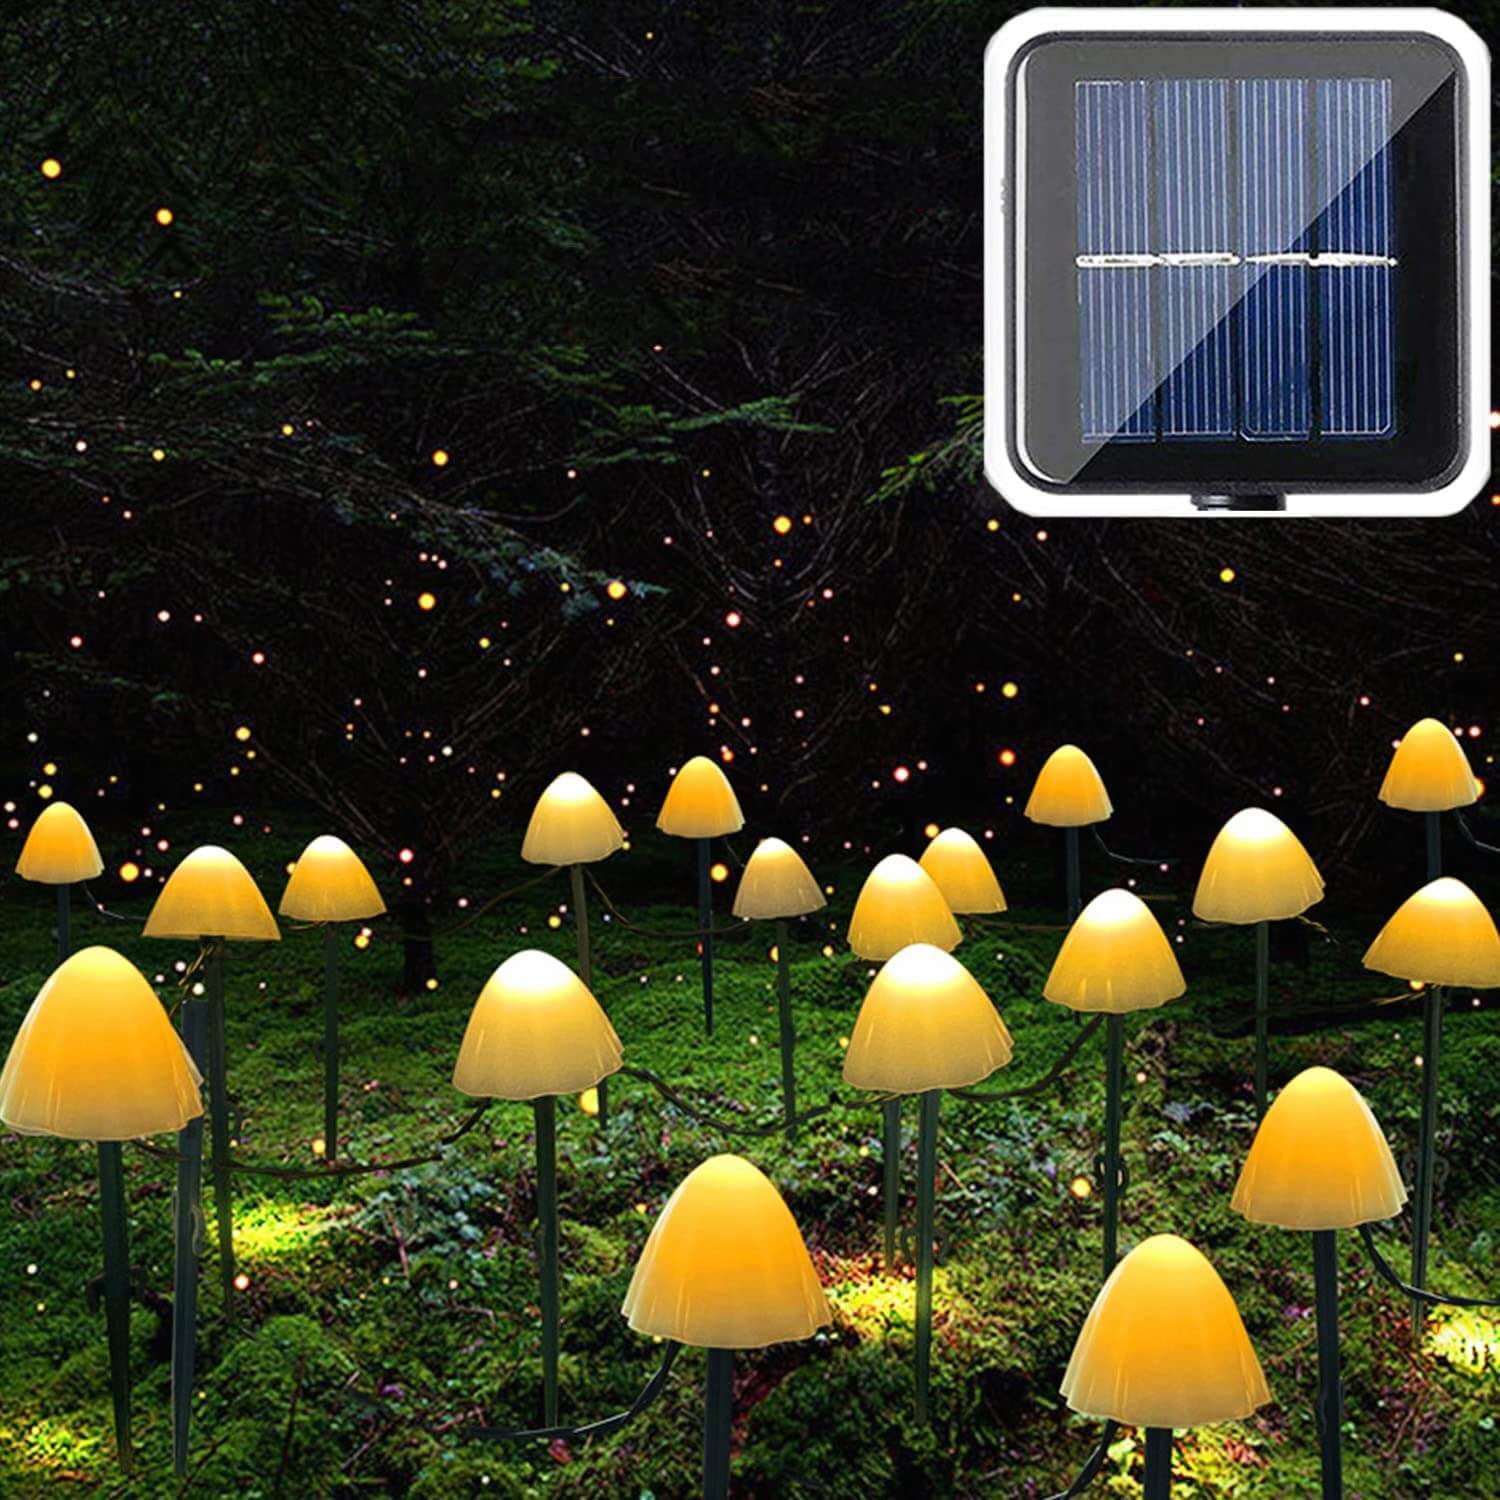 Tiyupa 20 LED Solar Mushroom Pathway Lights